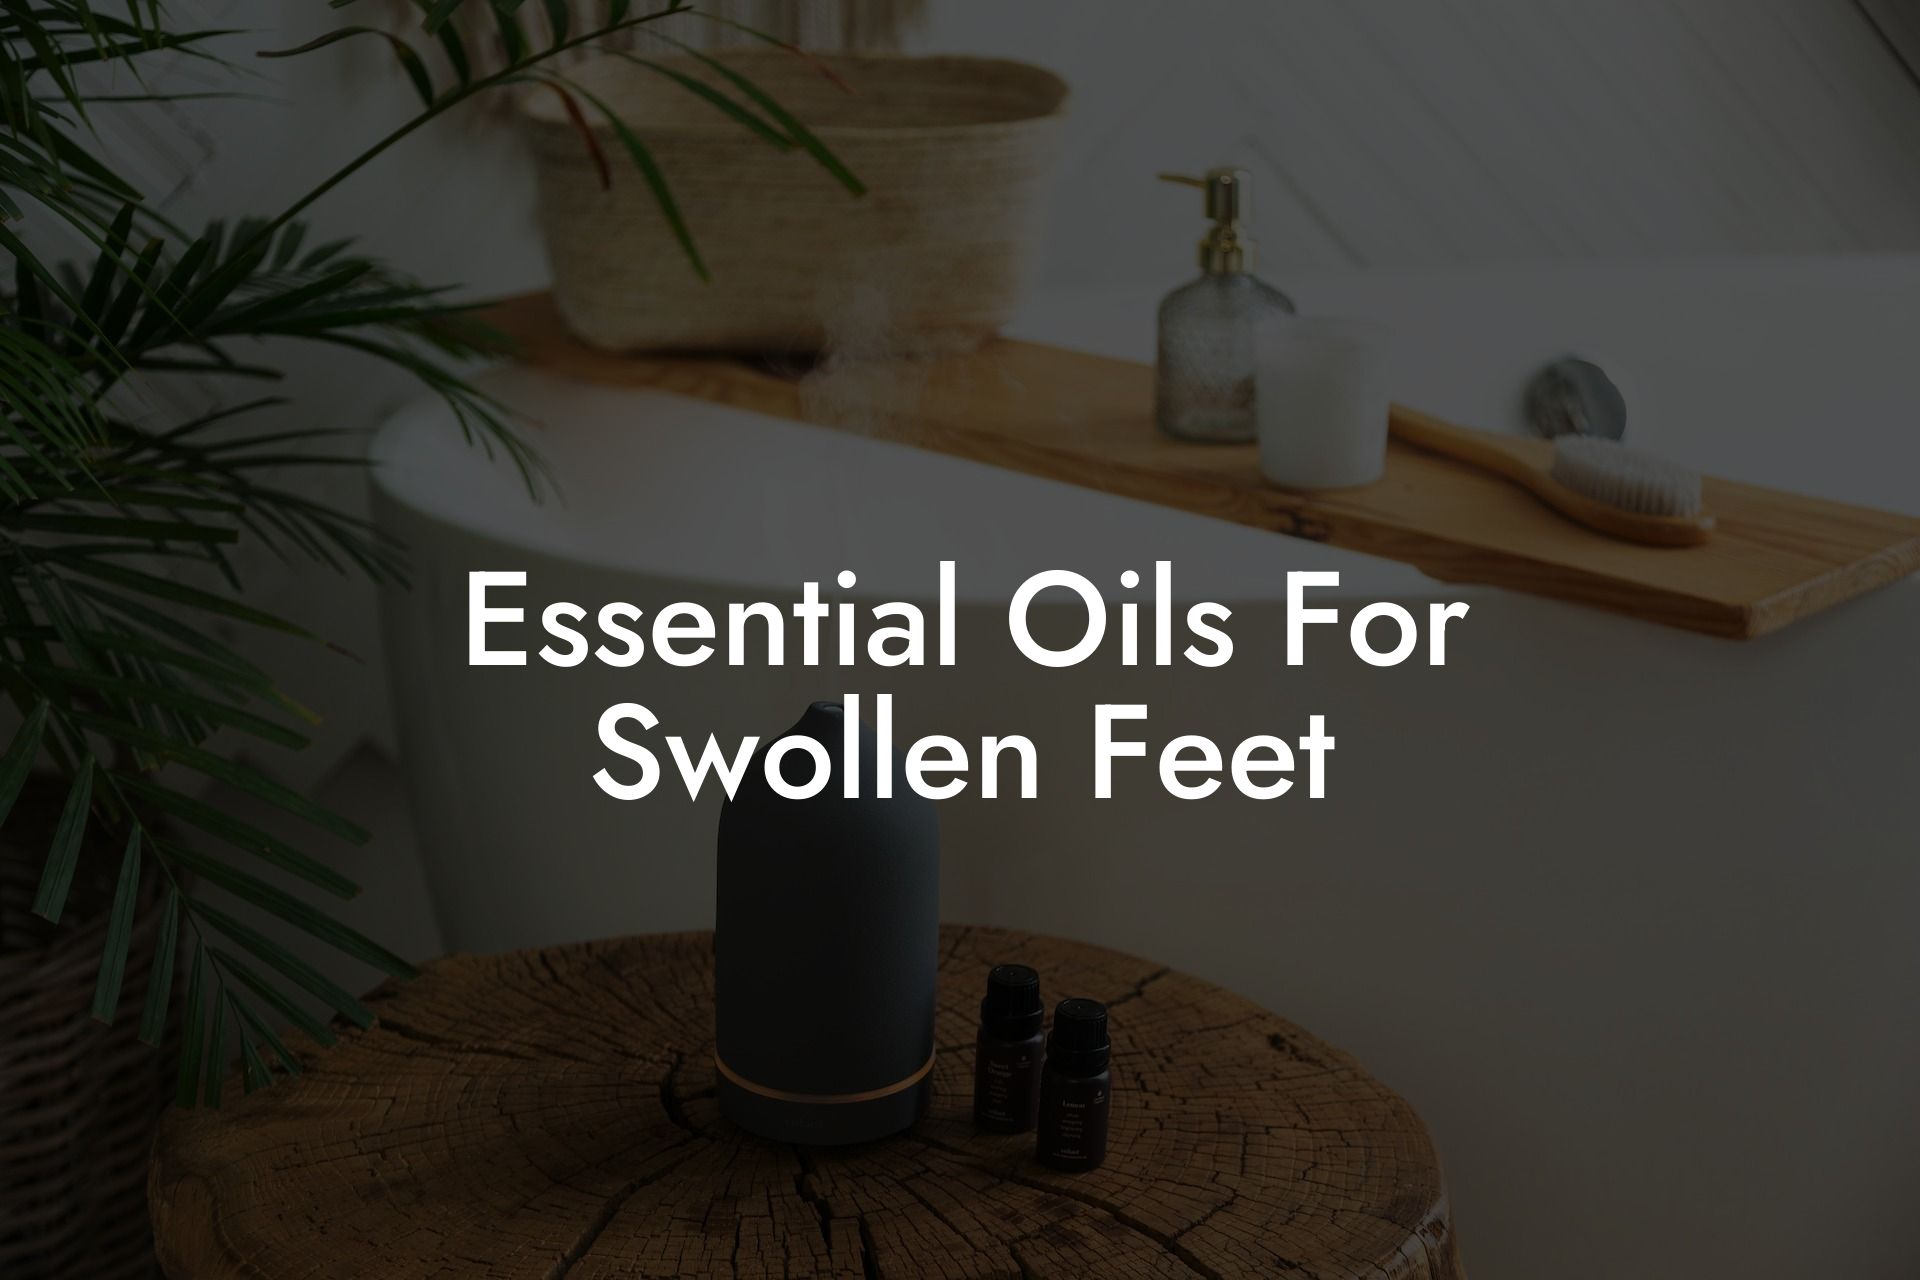 Essential Oils For Swollen Feet